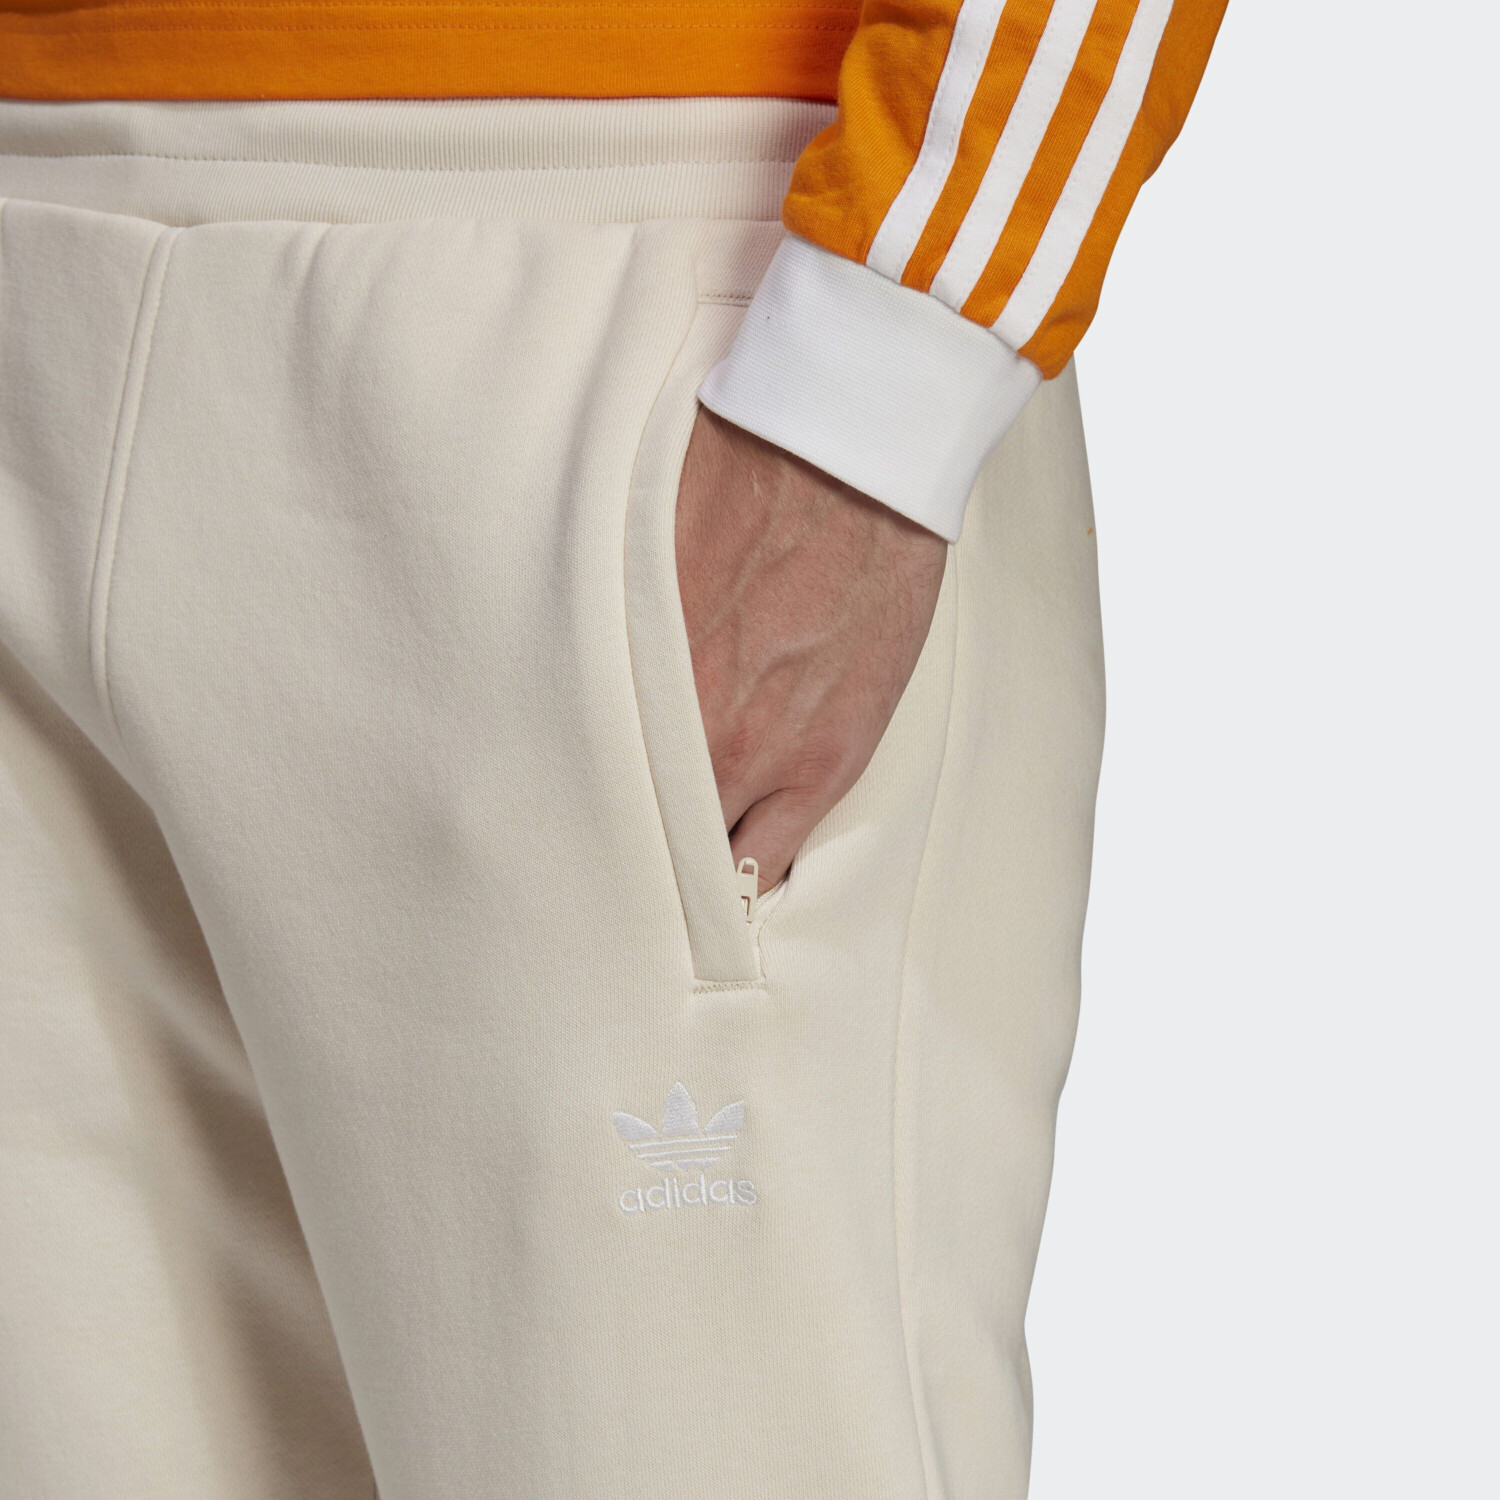 ab white | 38,99 Adidas Preisvergleich wonder bei Joggers € Essentials Trefoil Adicolor